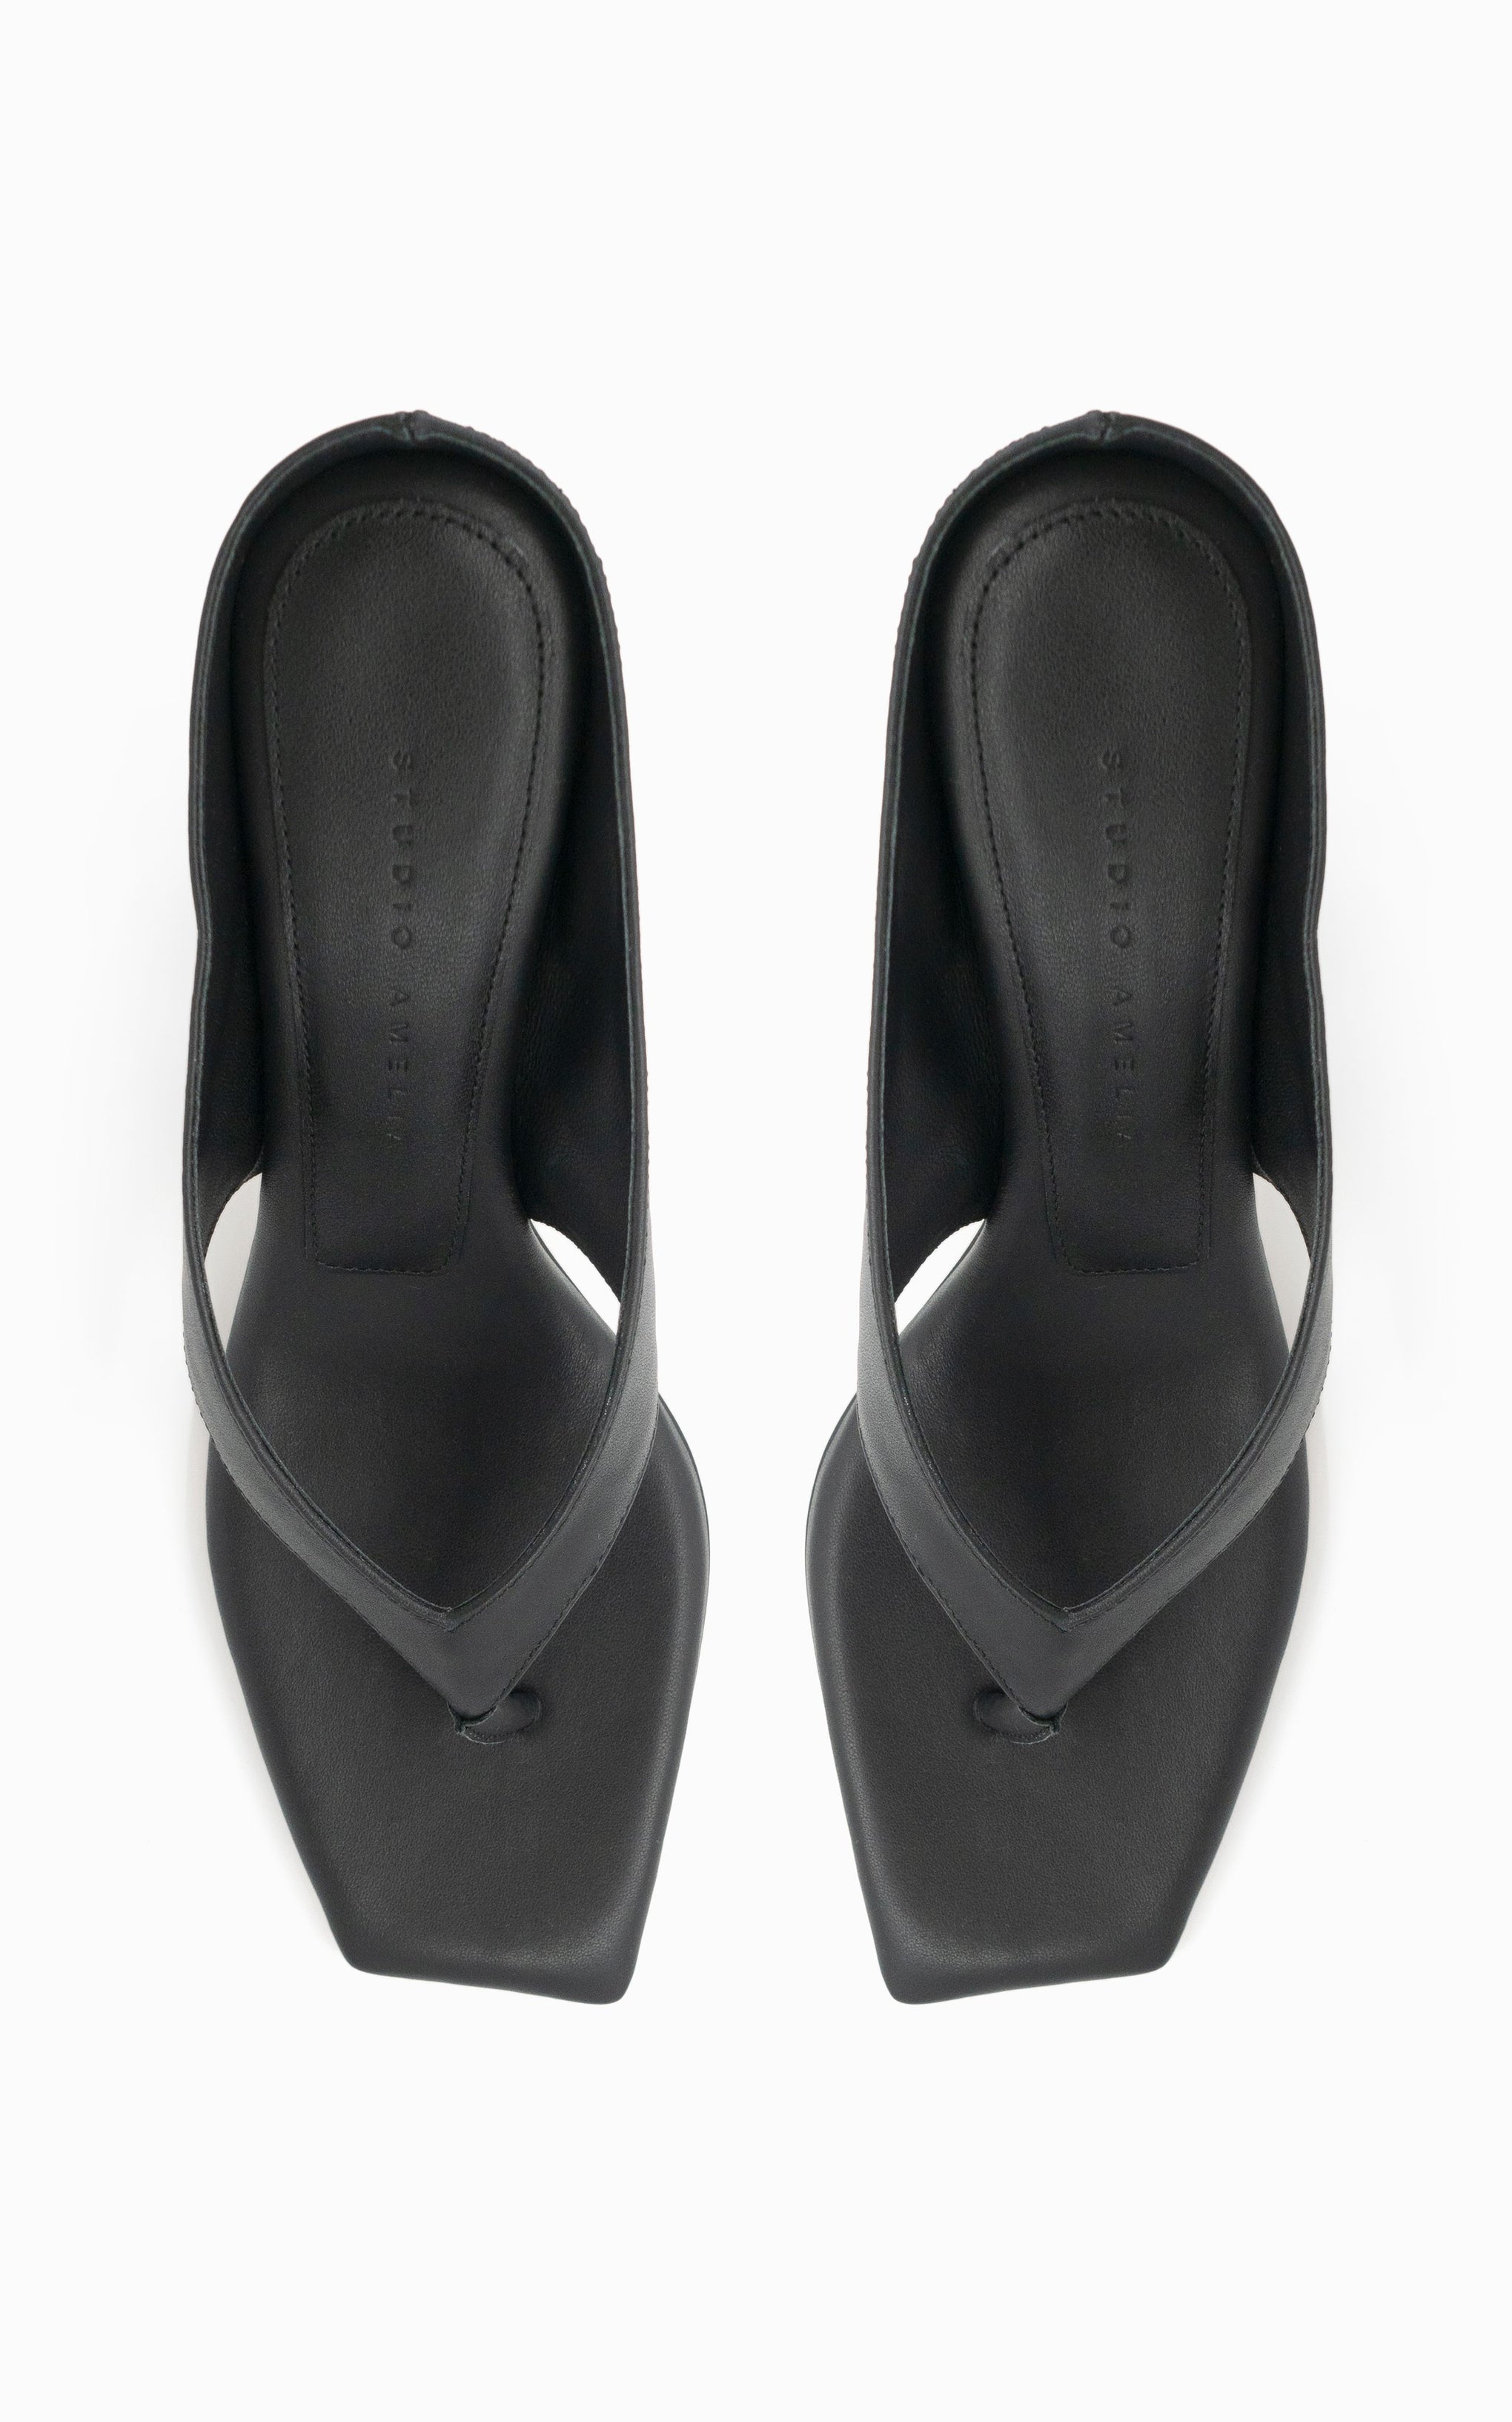 The Studio Amelia Angela 50 Heel in Black available at The New Trend Australia